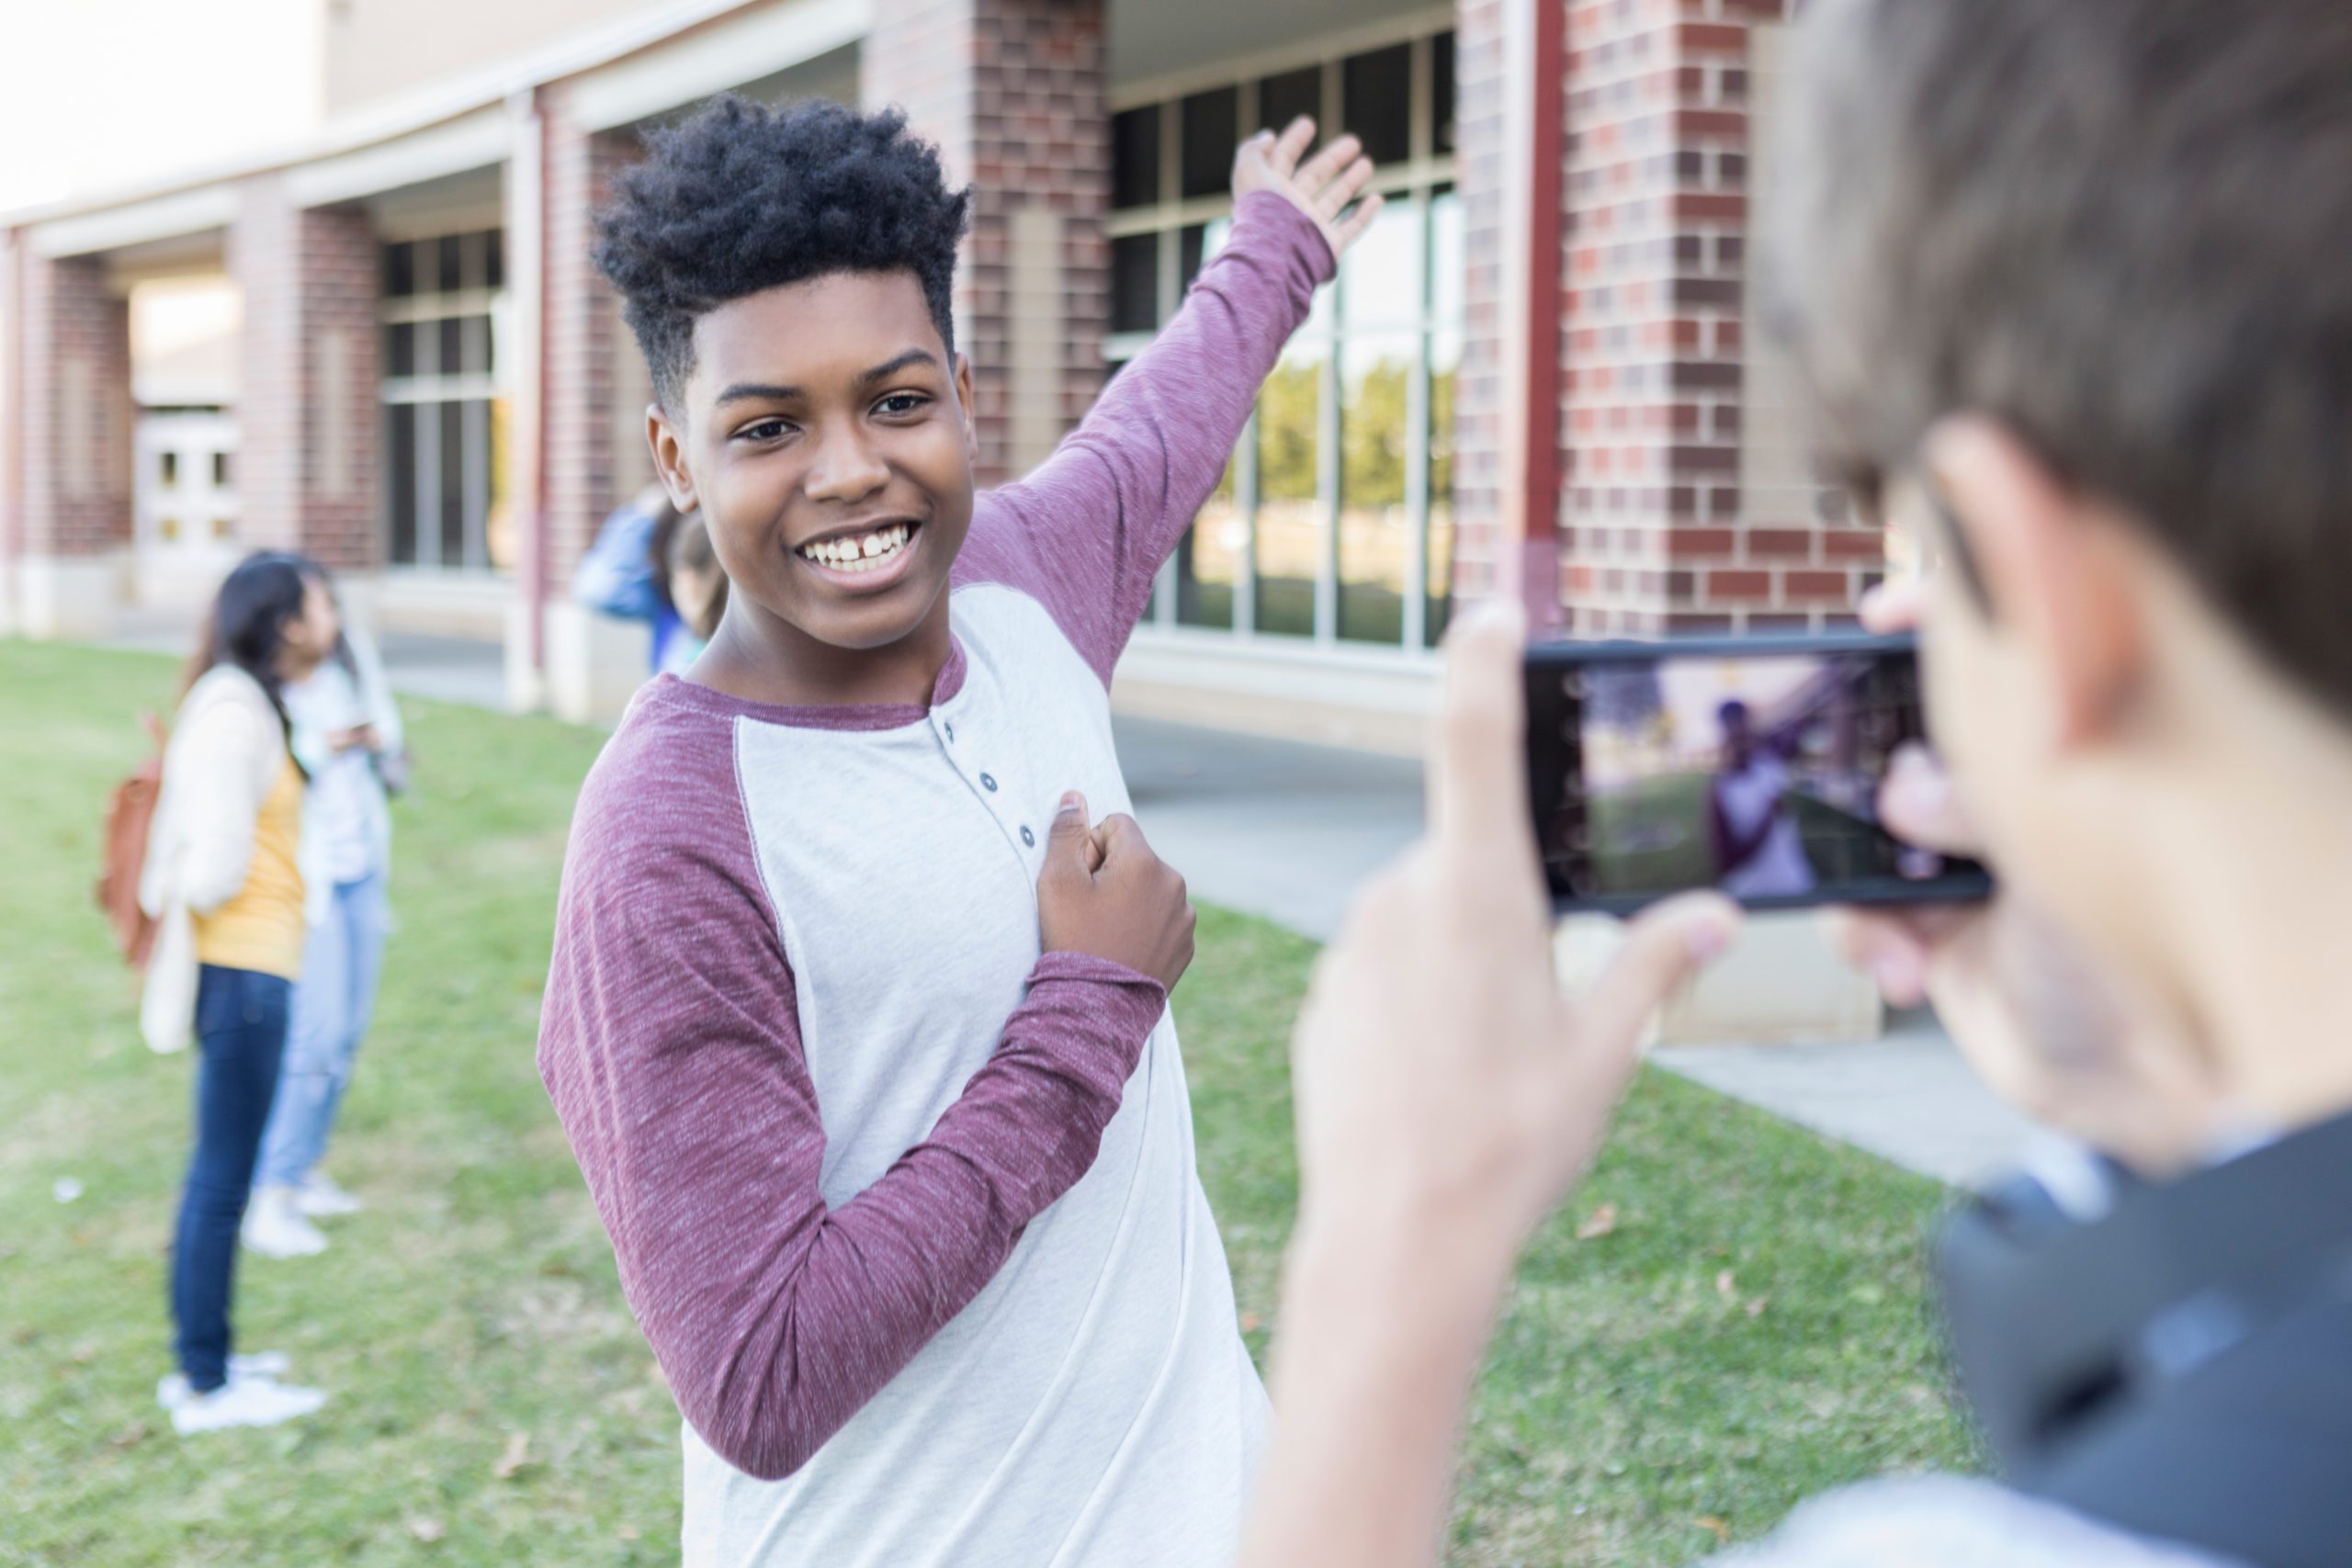 Teenage boy taking photo outside high school on campus